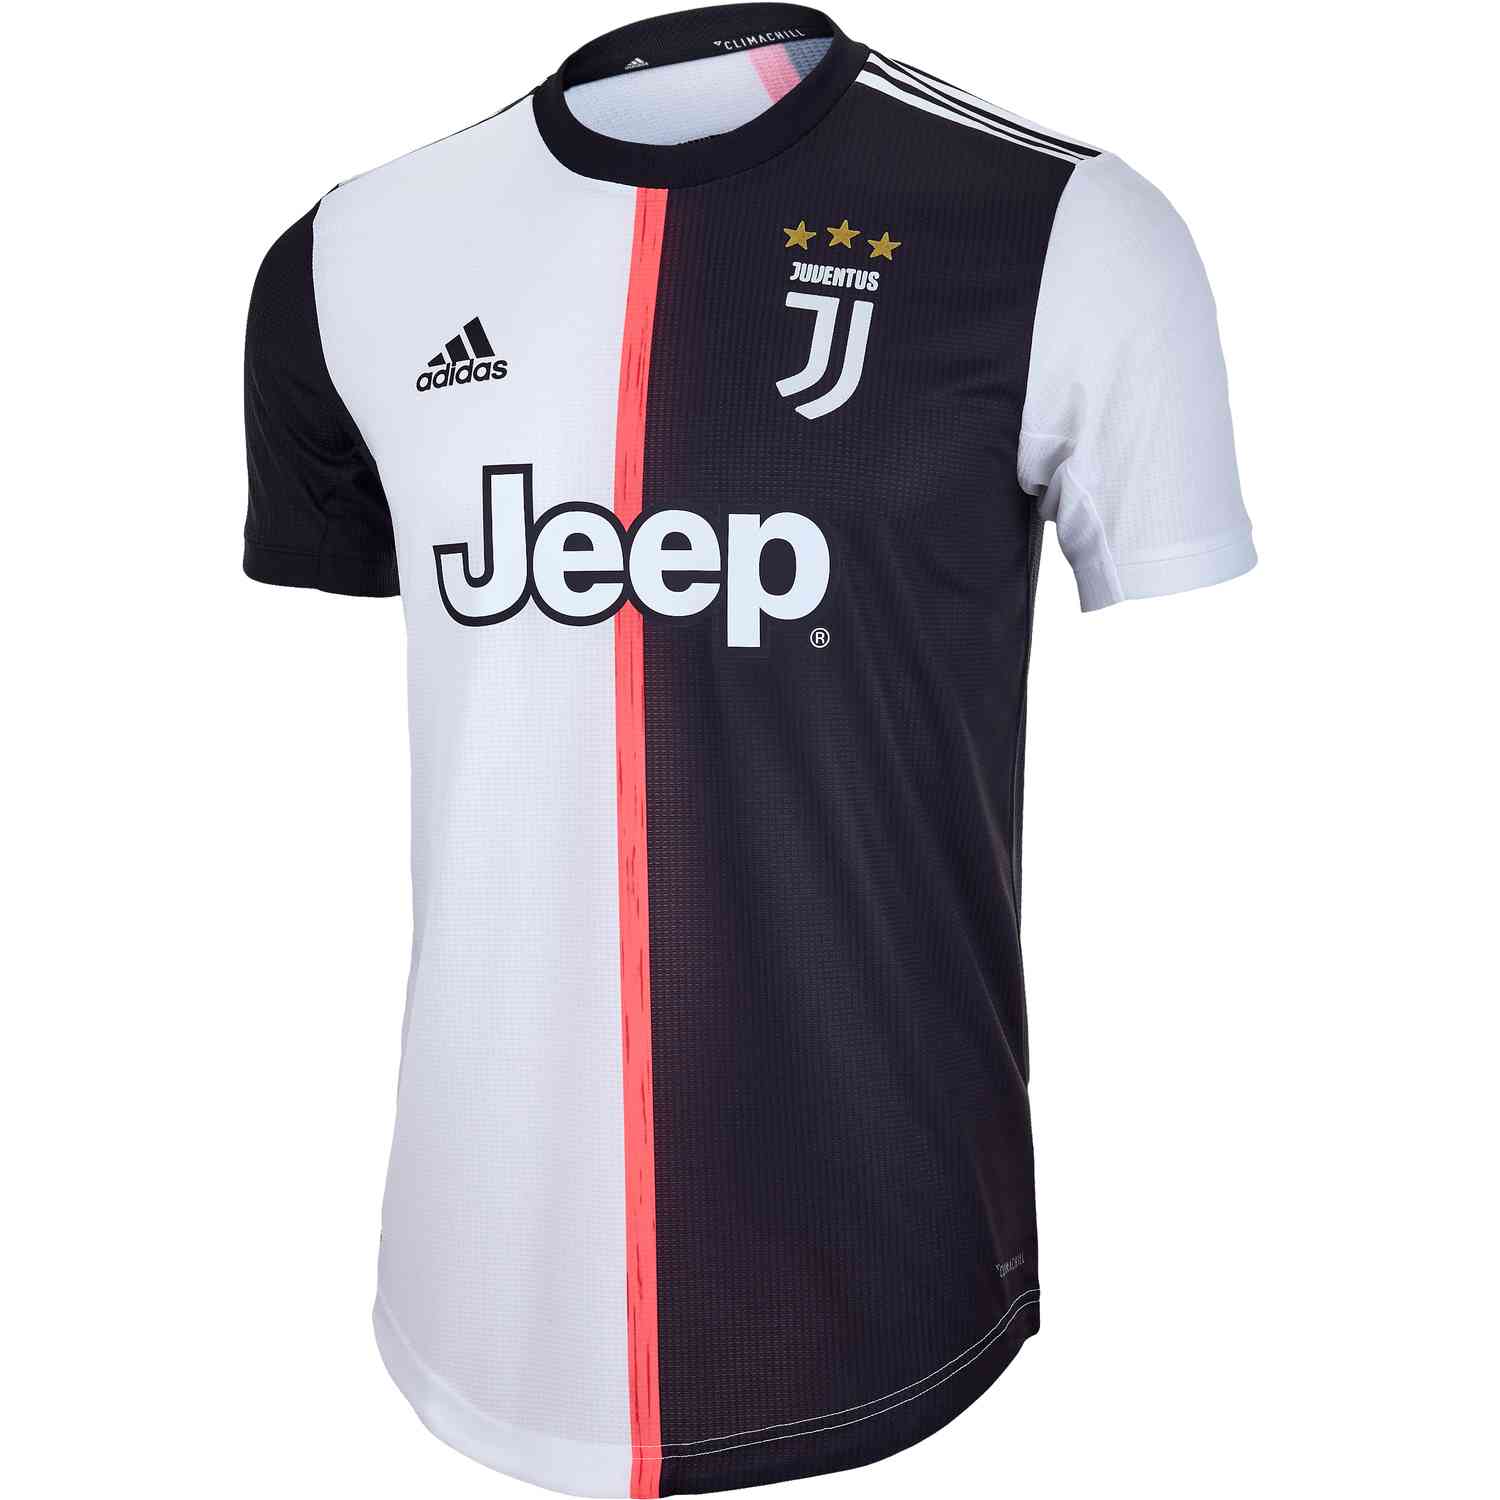 Idealmente Masculinidad Mayor 2019/20 Paulo Dybala Juventus Home Authentic Jersey - Soccer Master